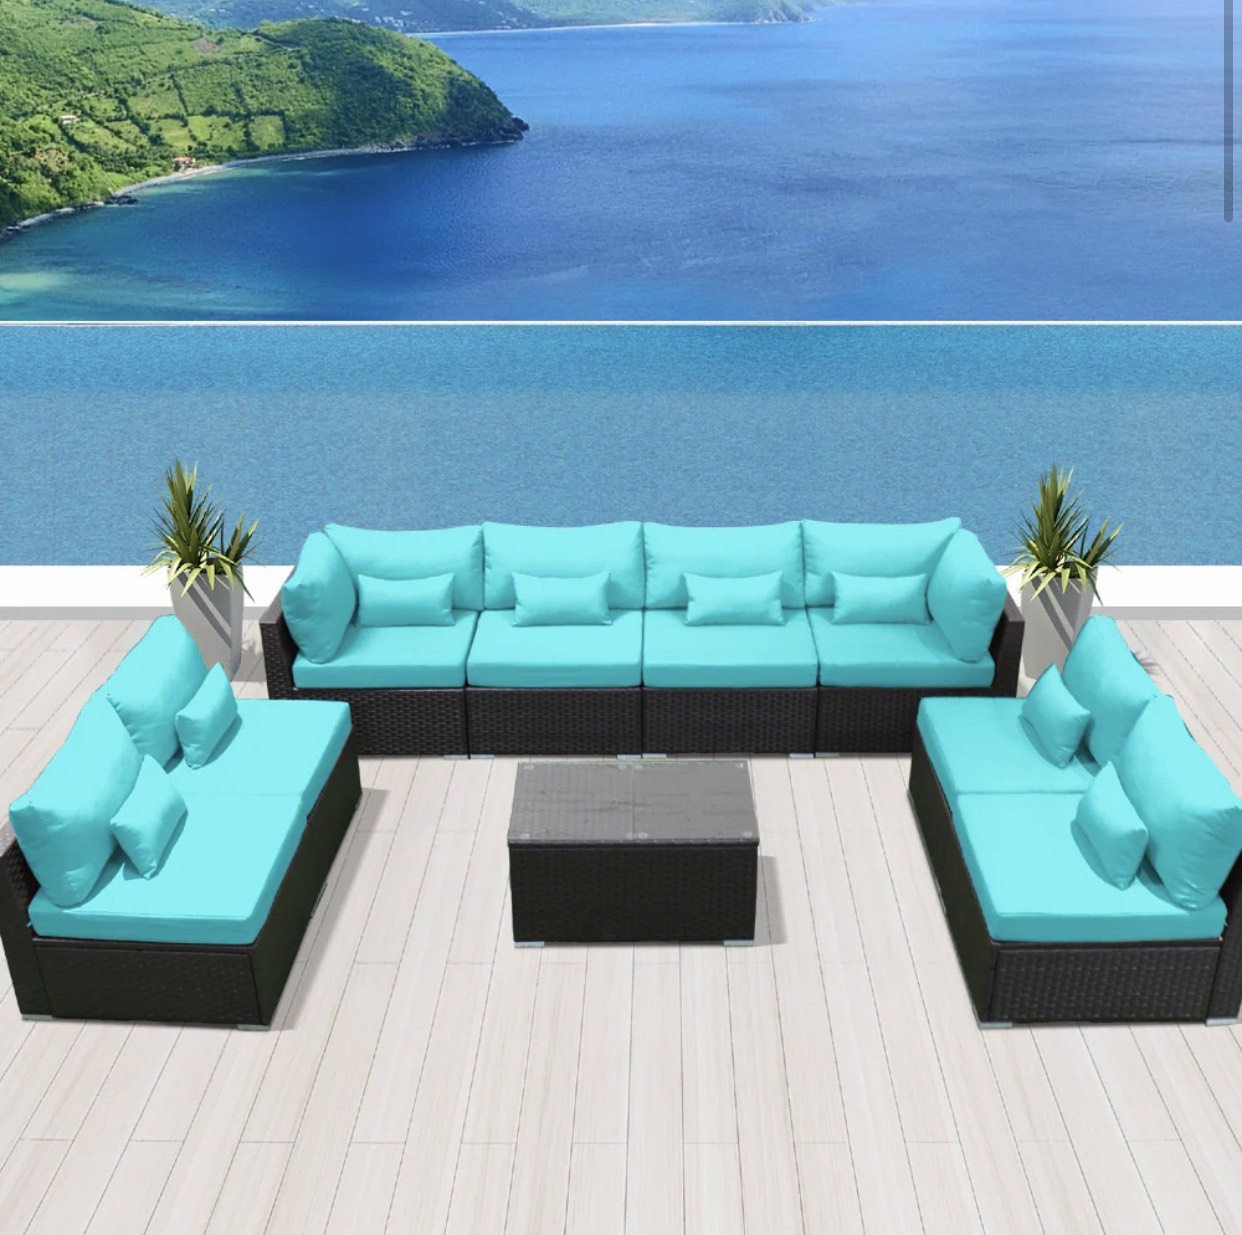 Blue Turquoise Outdoor Modern Wicker Patio Furniture Sofa Set 9 Piece Nine